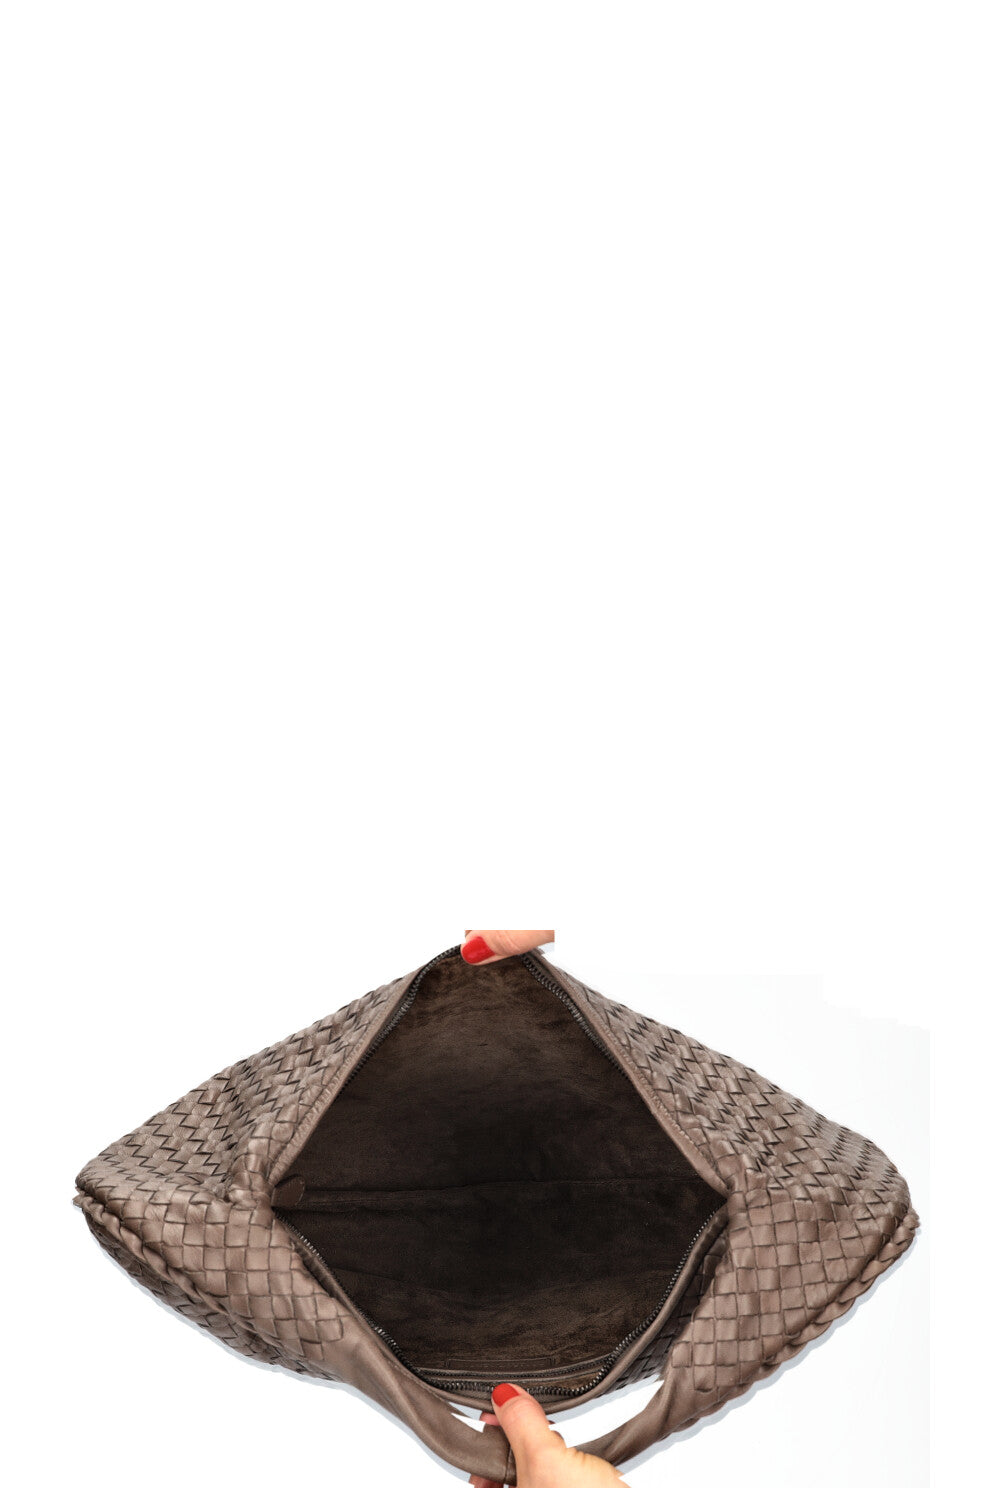 Bottega Veneta® Small Intrecciato Backpack in Taupe. Shop online now.